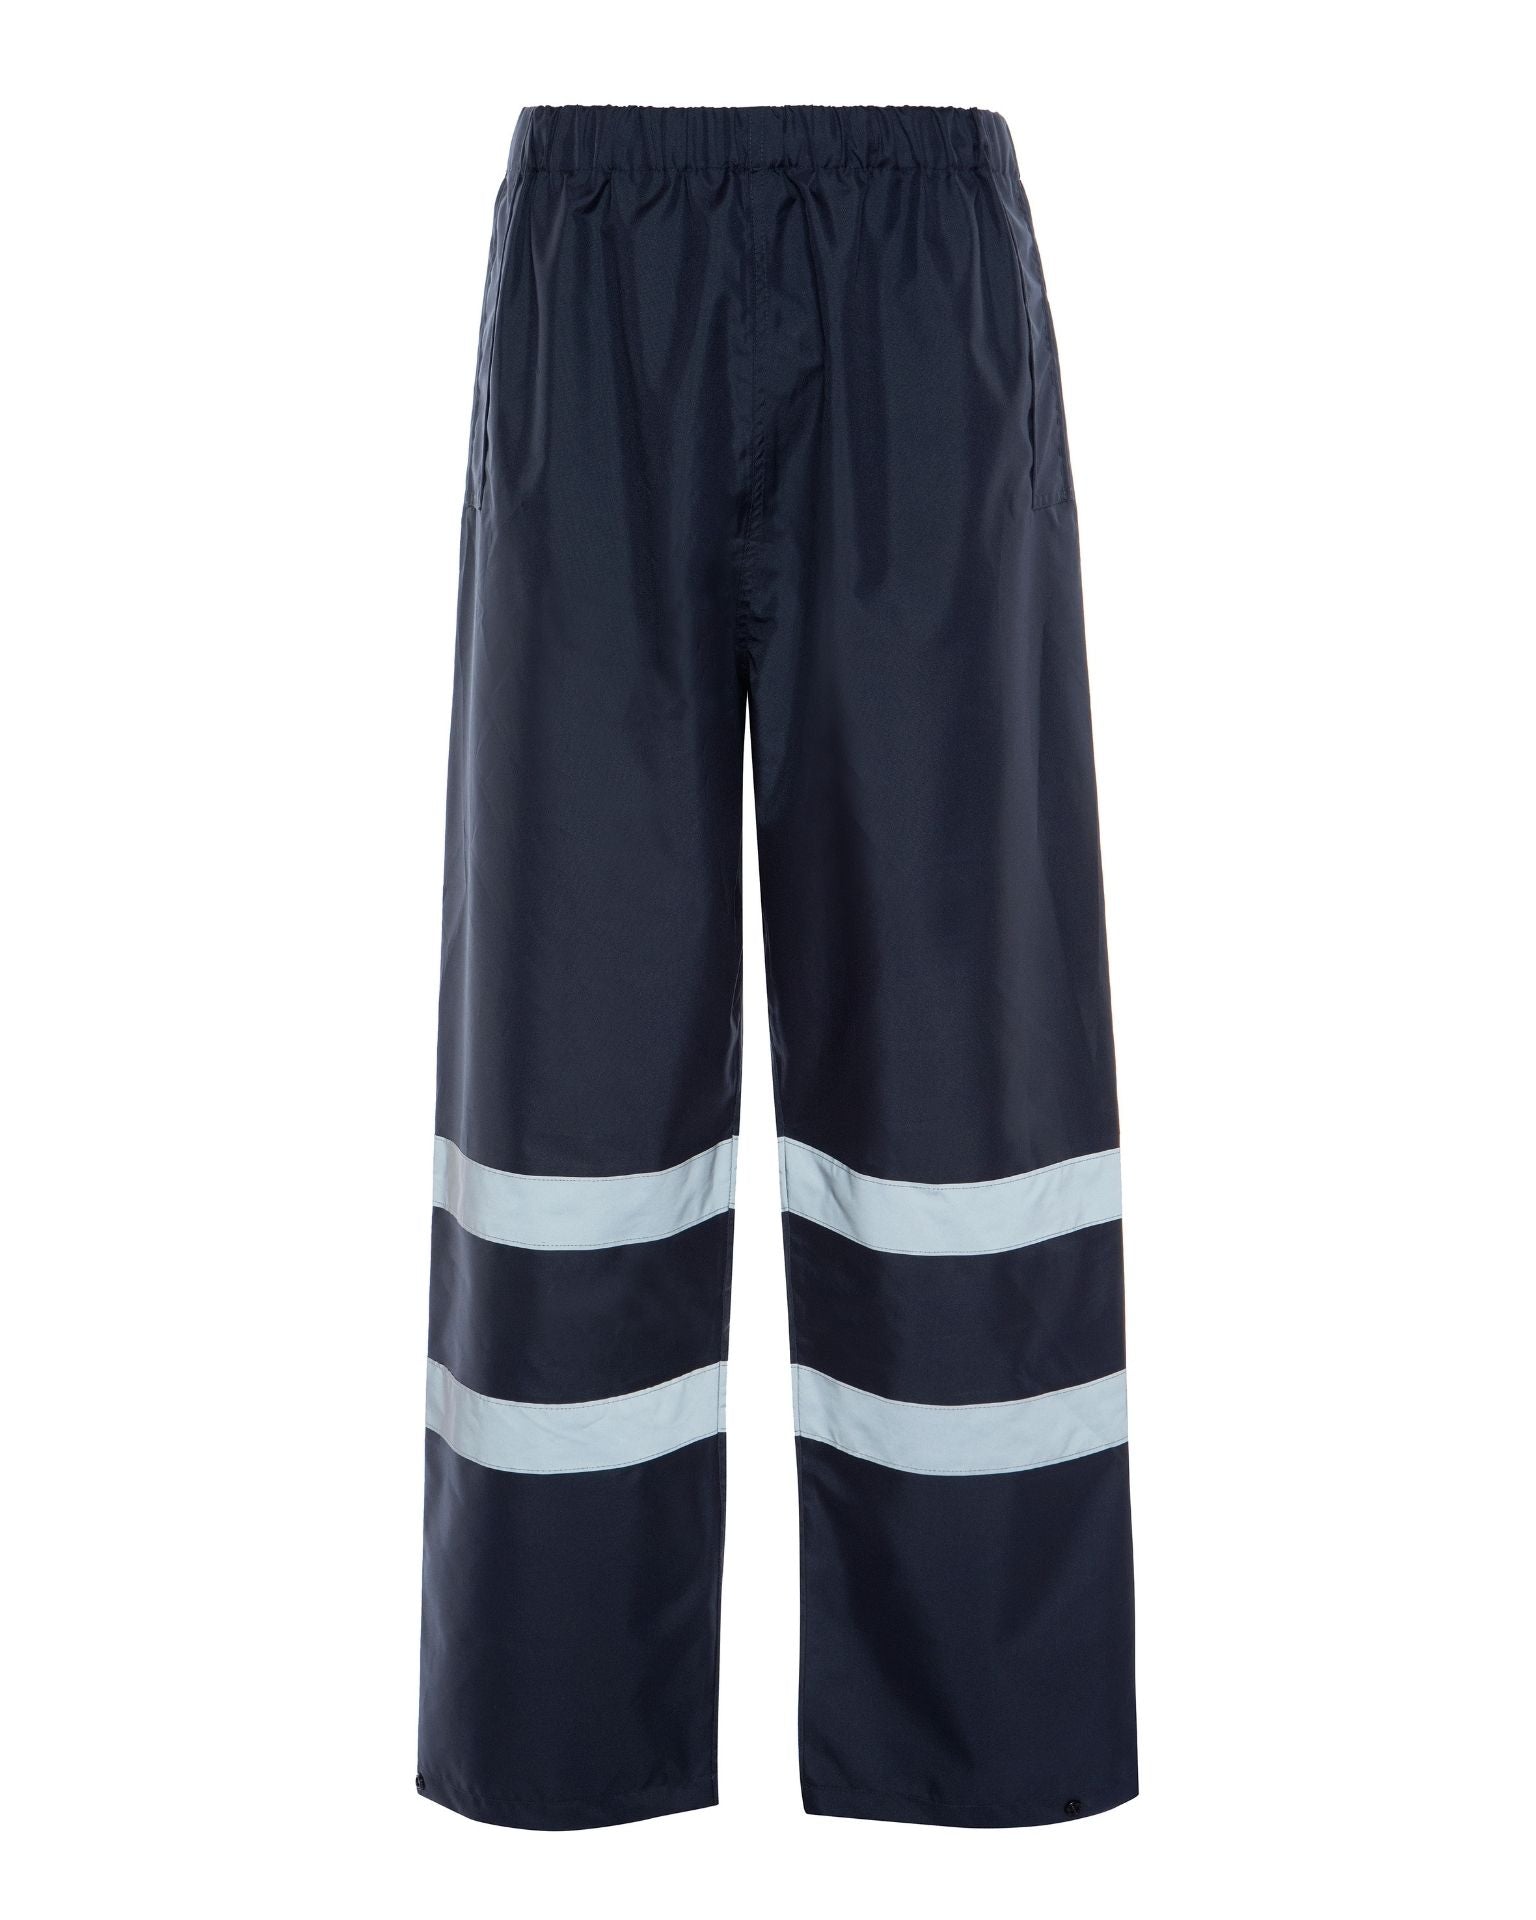 UPA891 - Lightweight Rain Suit Pants - Navy - Utility Pro Wear